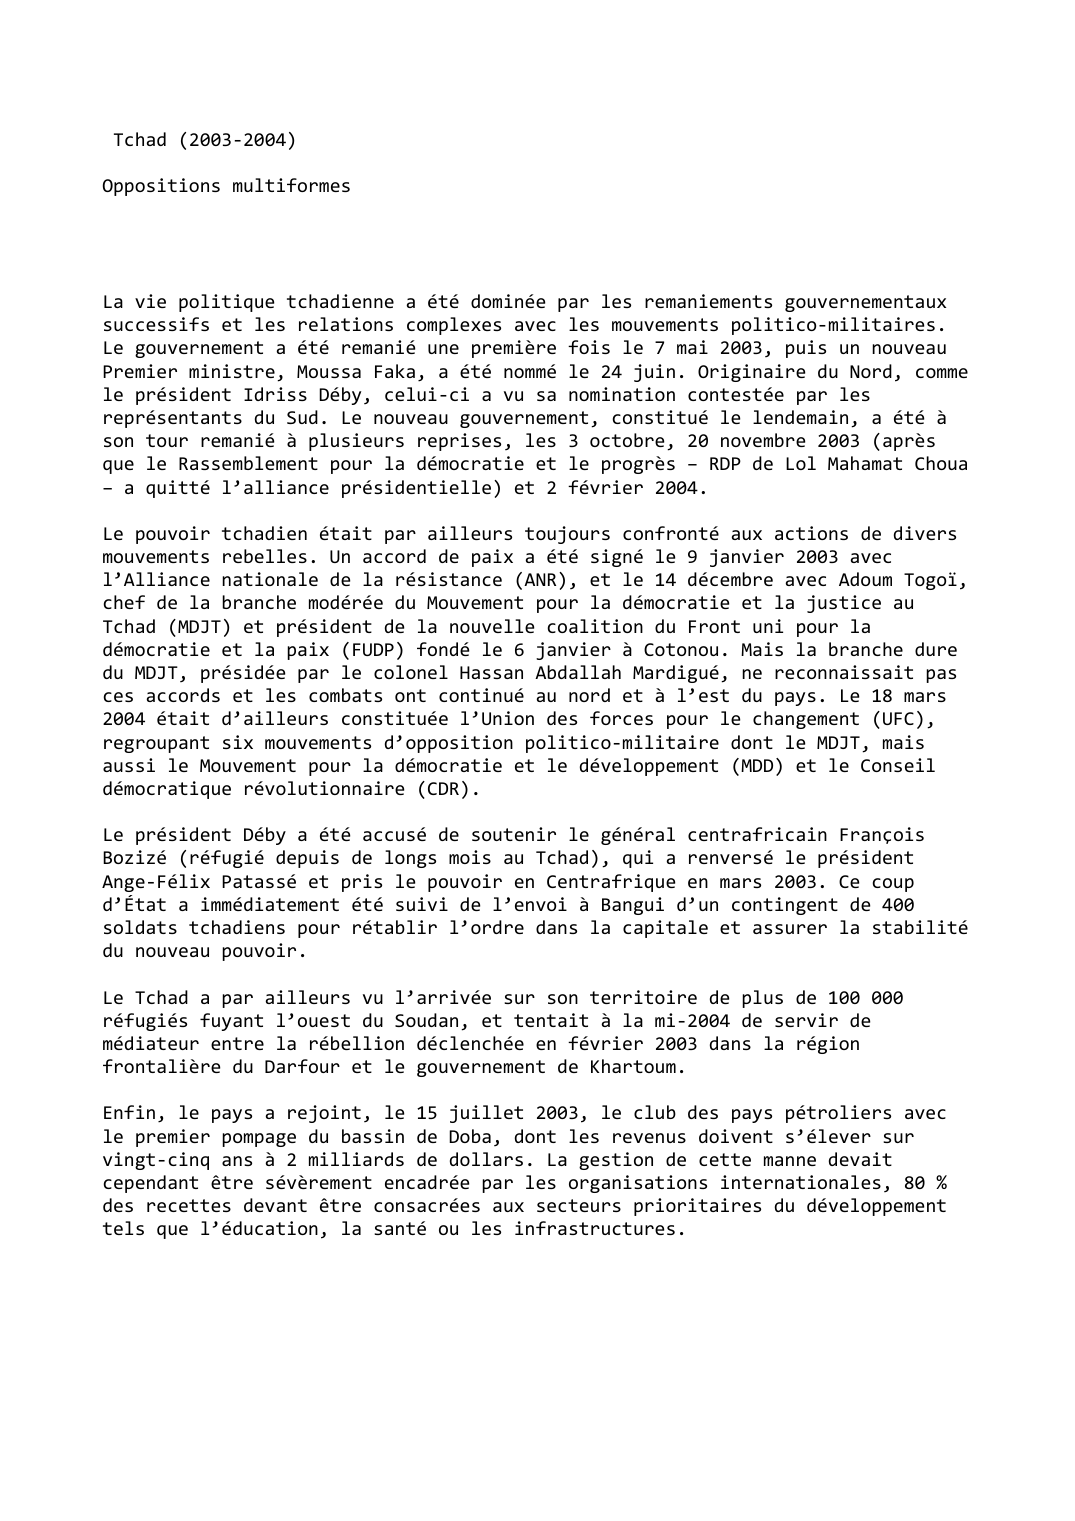 Prévisualisation du document Tchad (2003-2004)

Oppositions multiformes